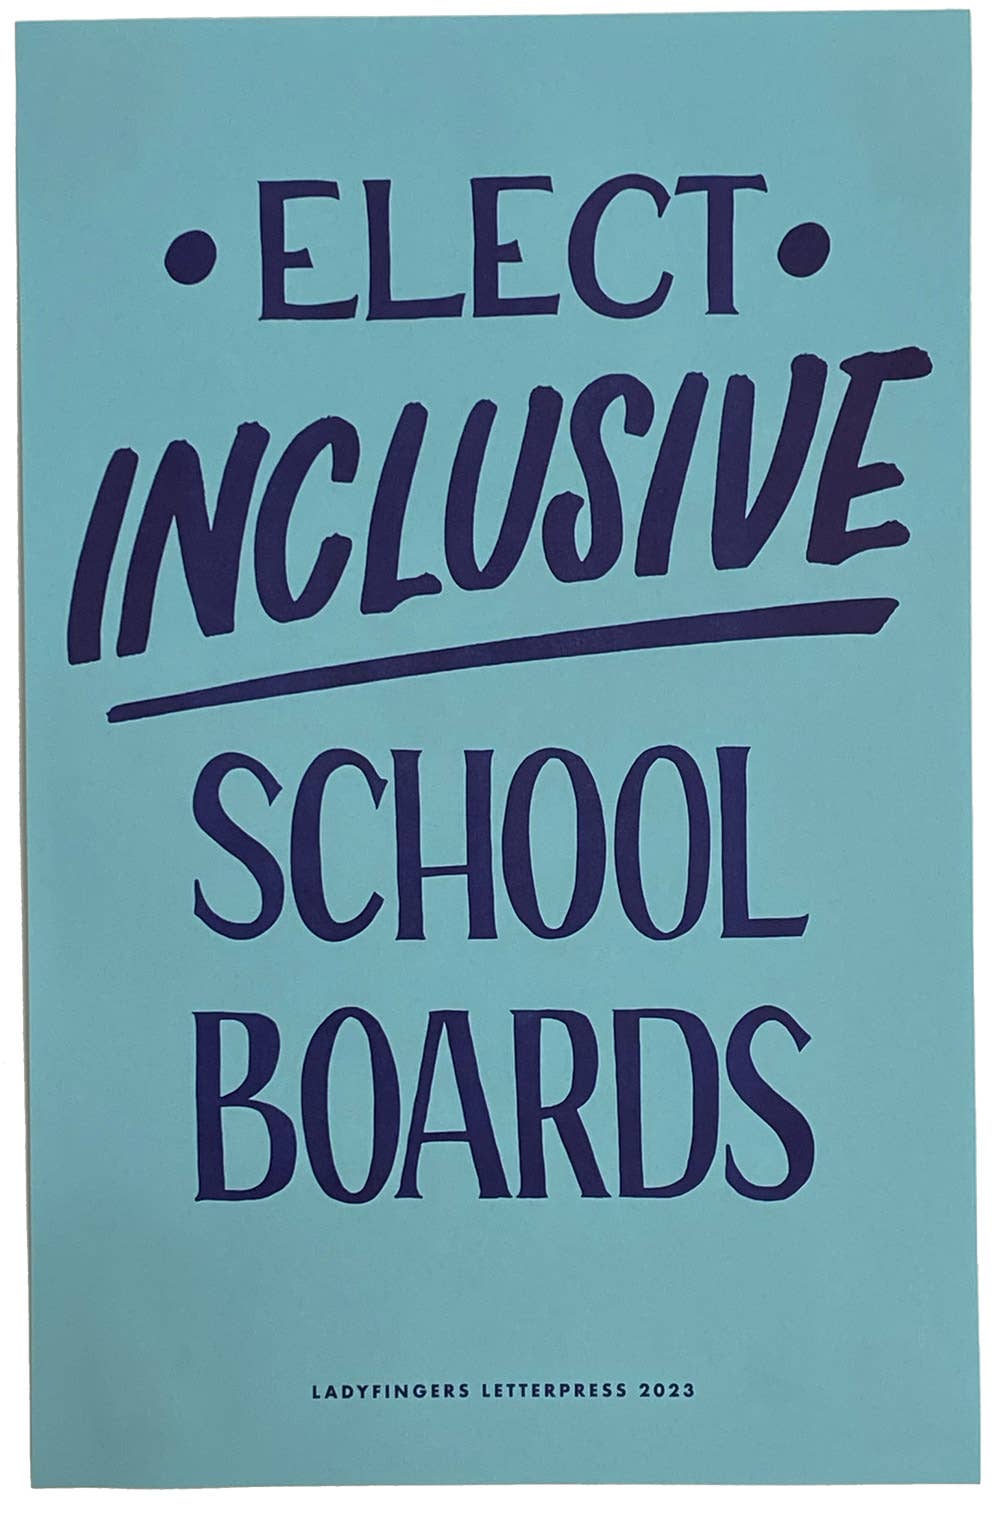 Elect Inclusive School Boards Protest Posters